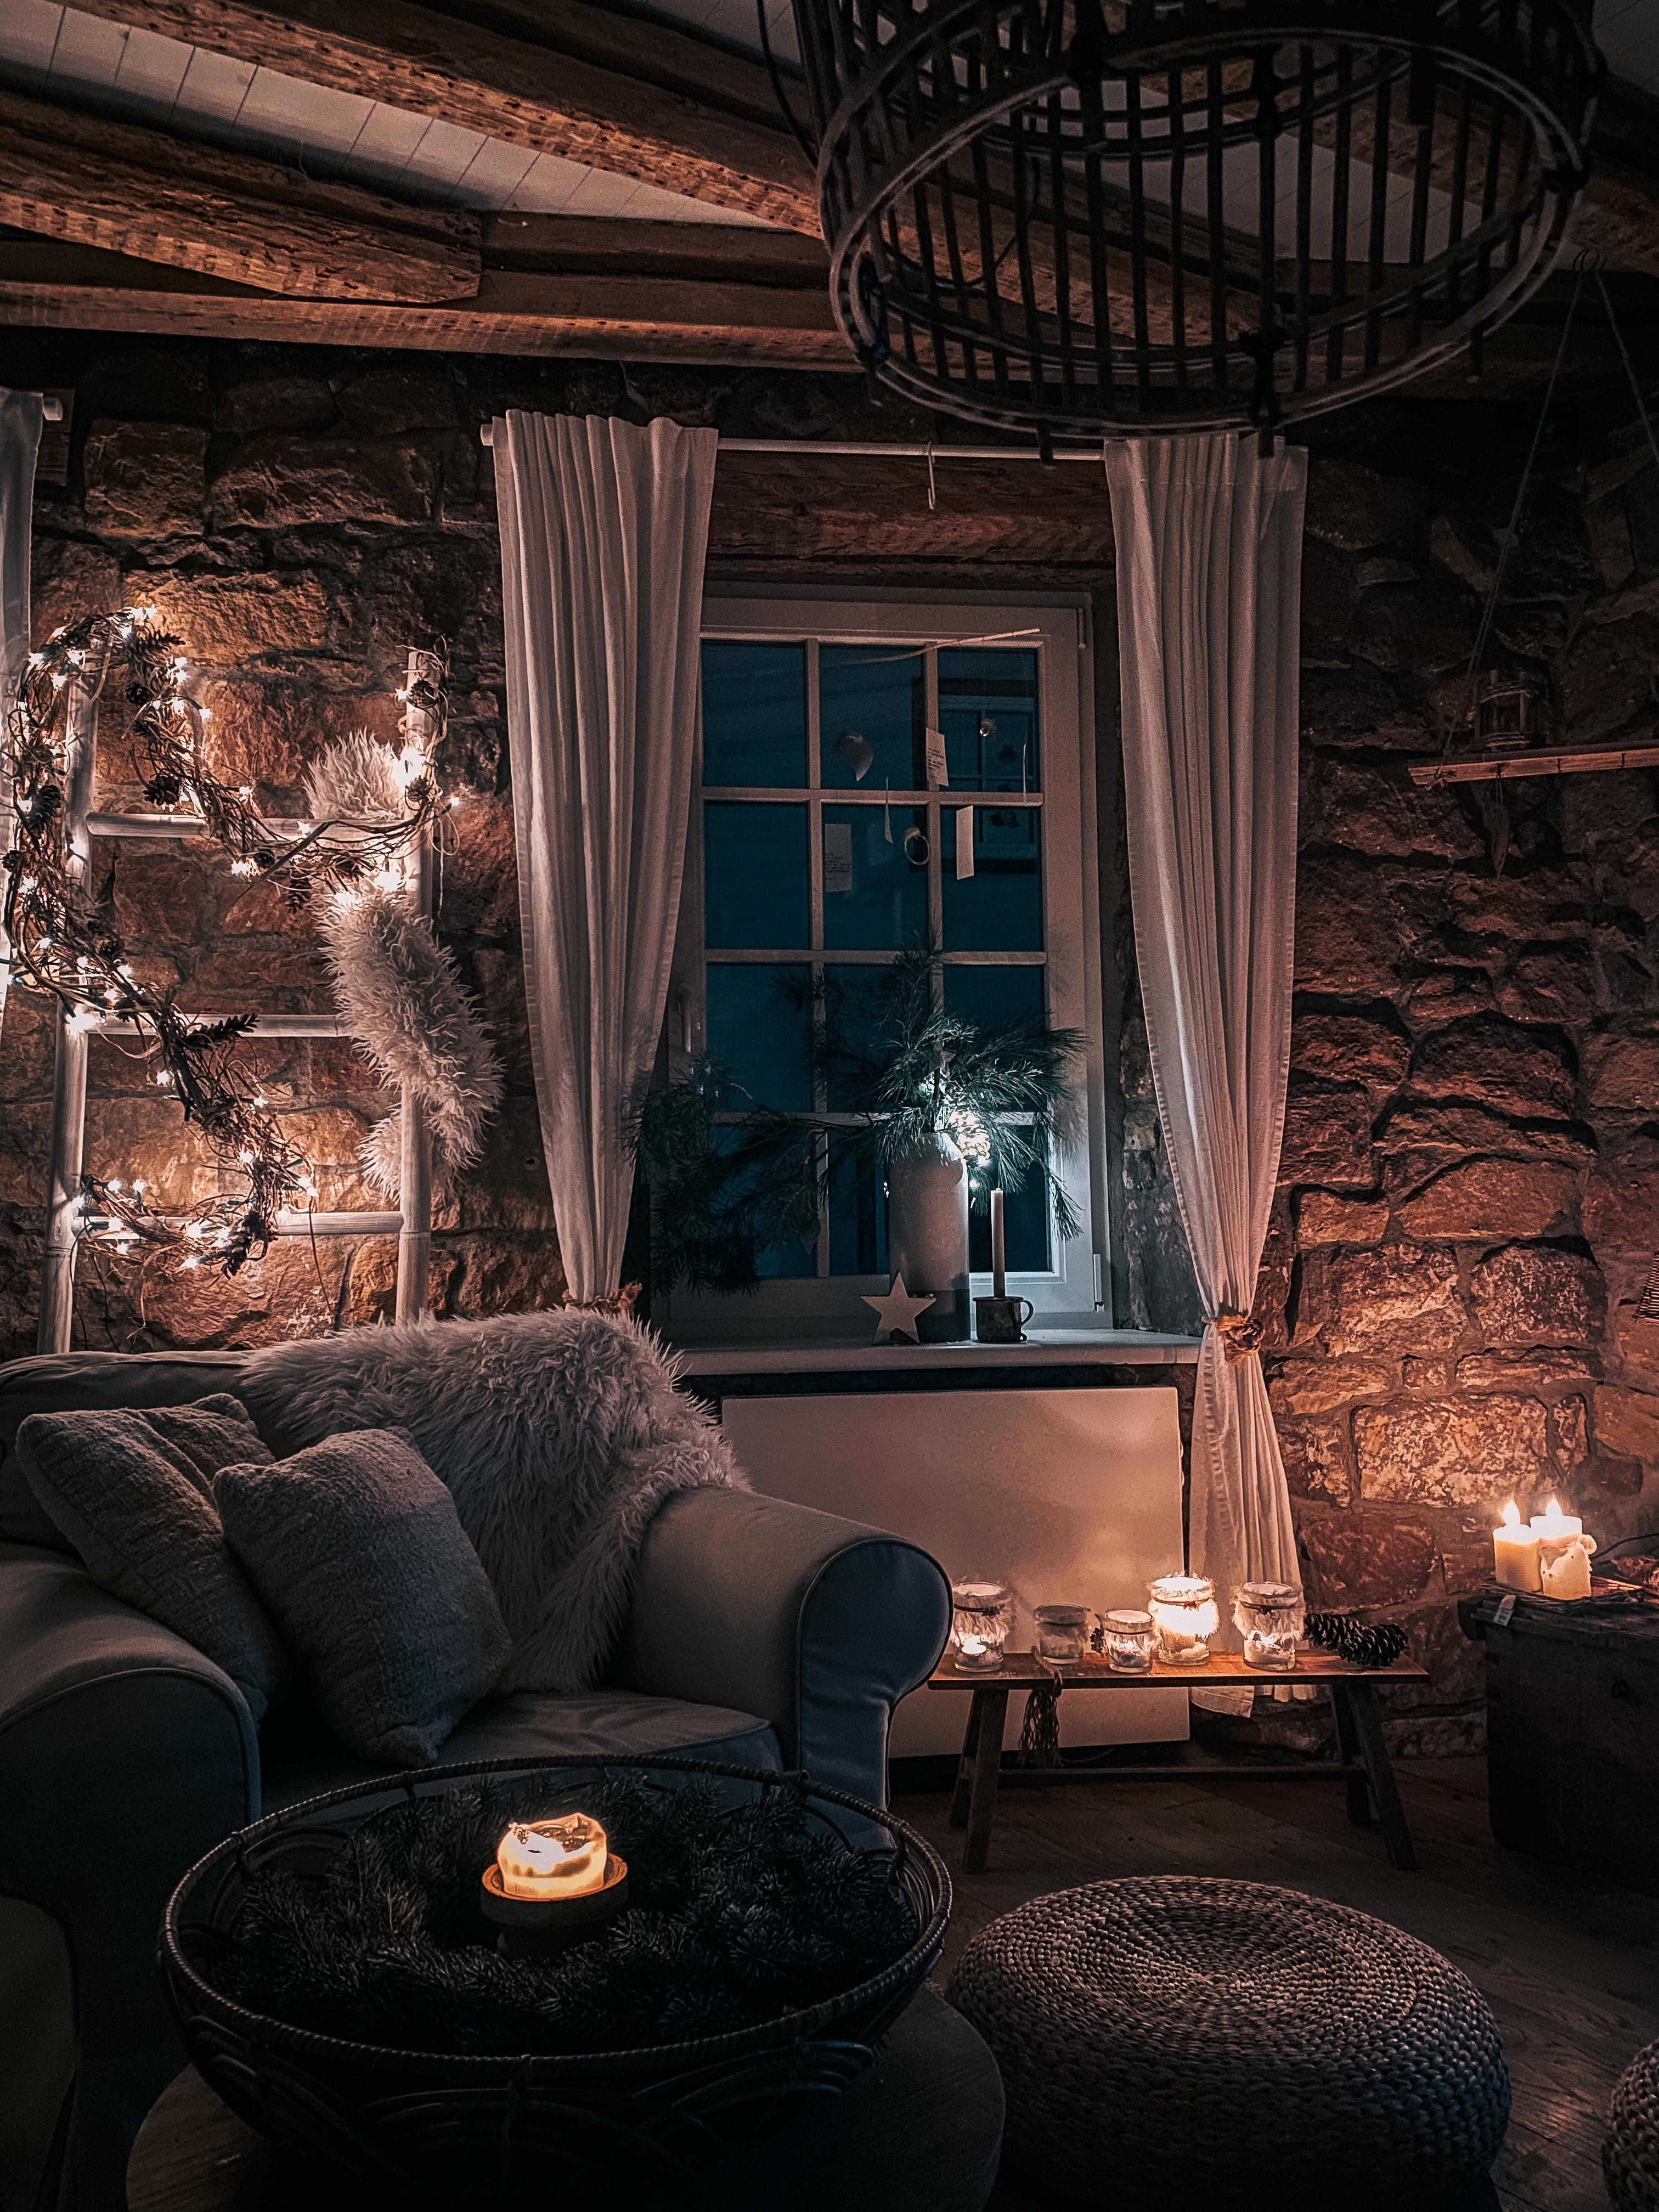 Cozy Cottage Vibes
#atännschenplease #cozyhome #gemütlich #christmasiscoming #couchstyle #kerzen #candlelight #cottage #wintervibes